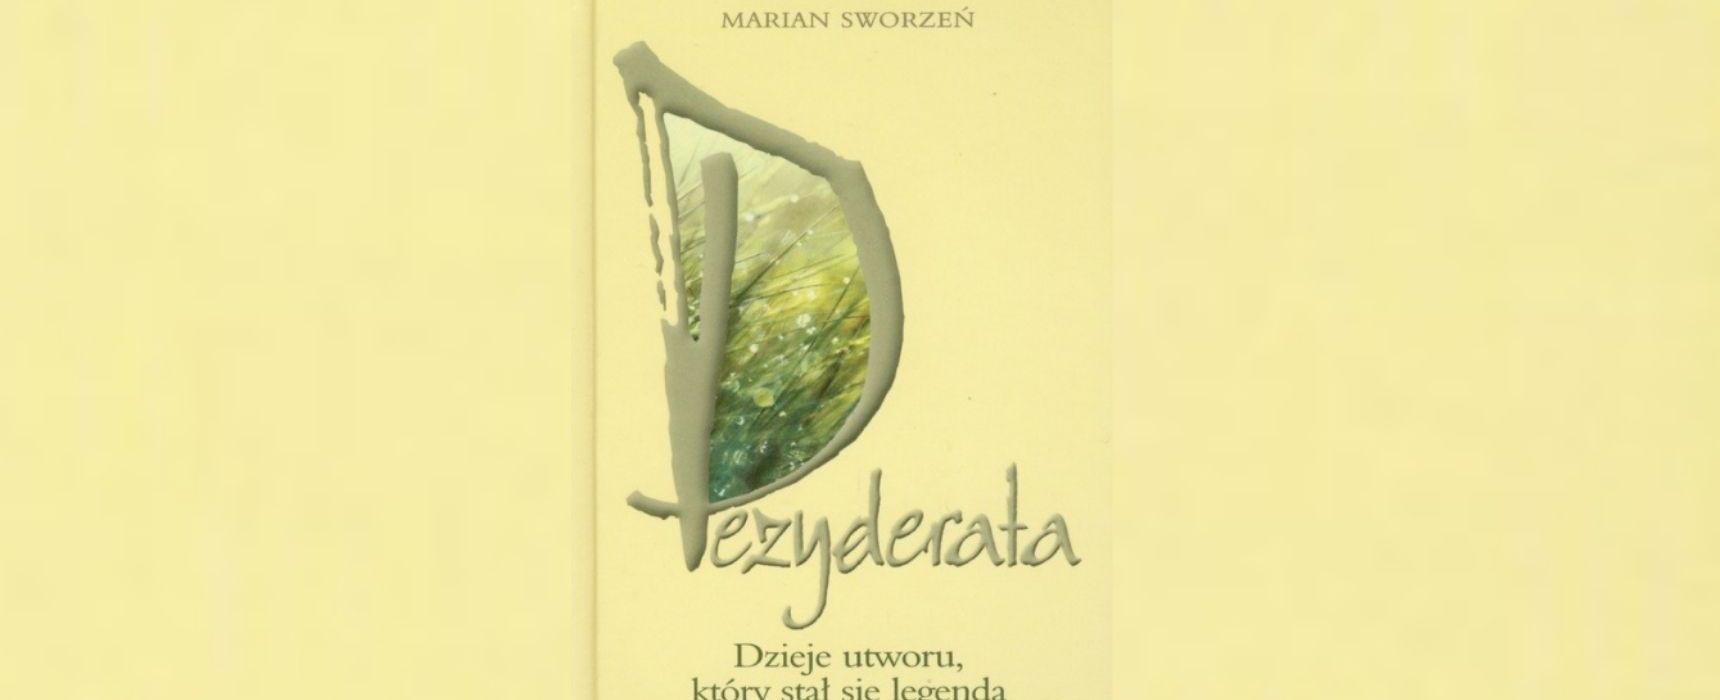 [sob. 15:00] Dezyderata – poemat Maxa Ehrmanna / Marian Sworzeń